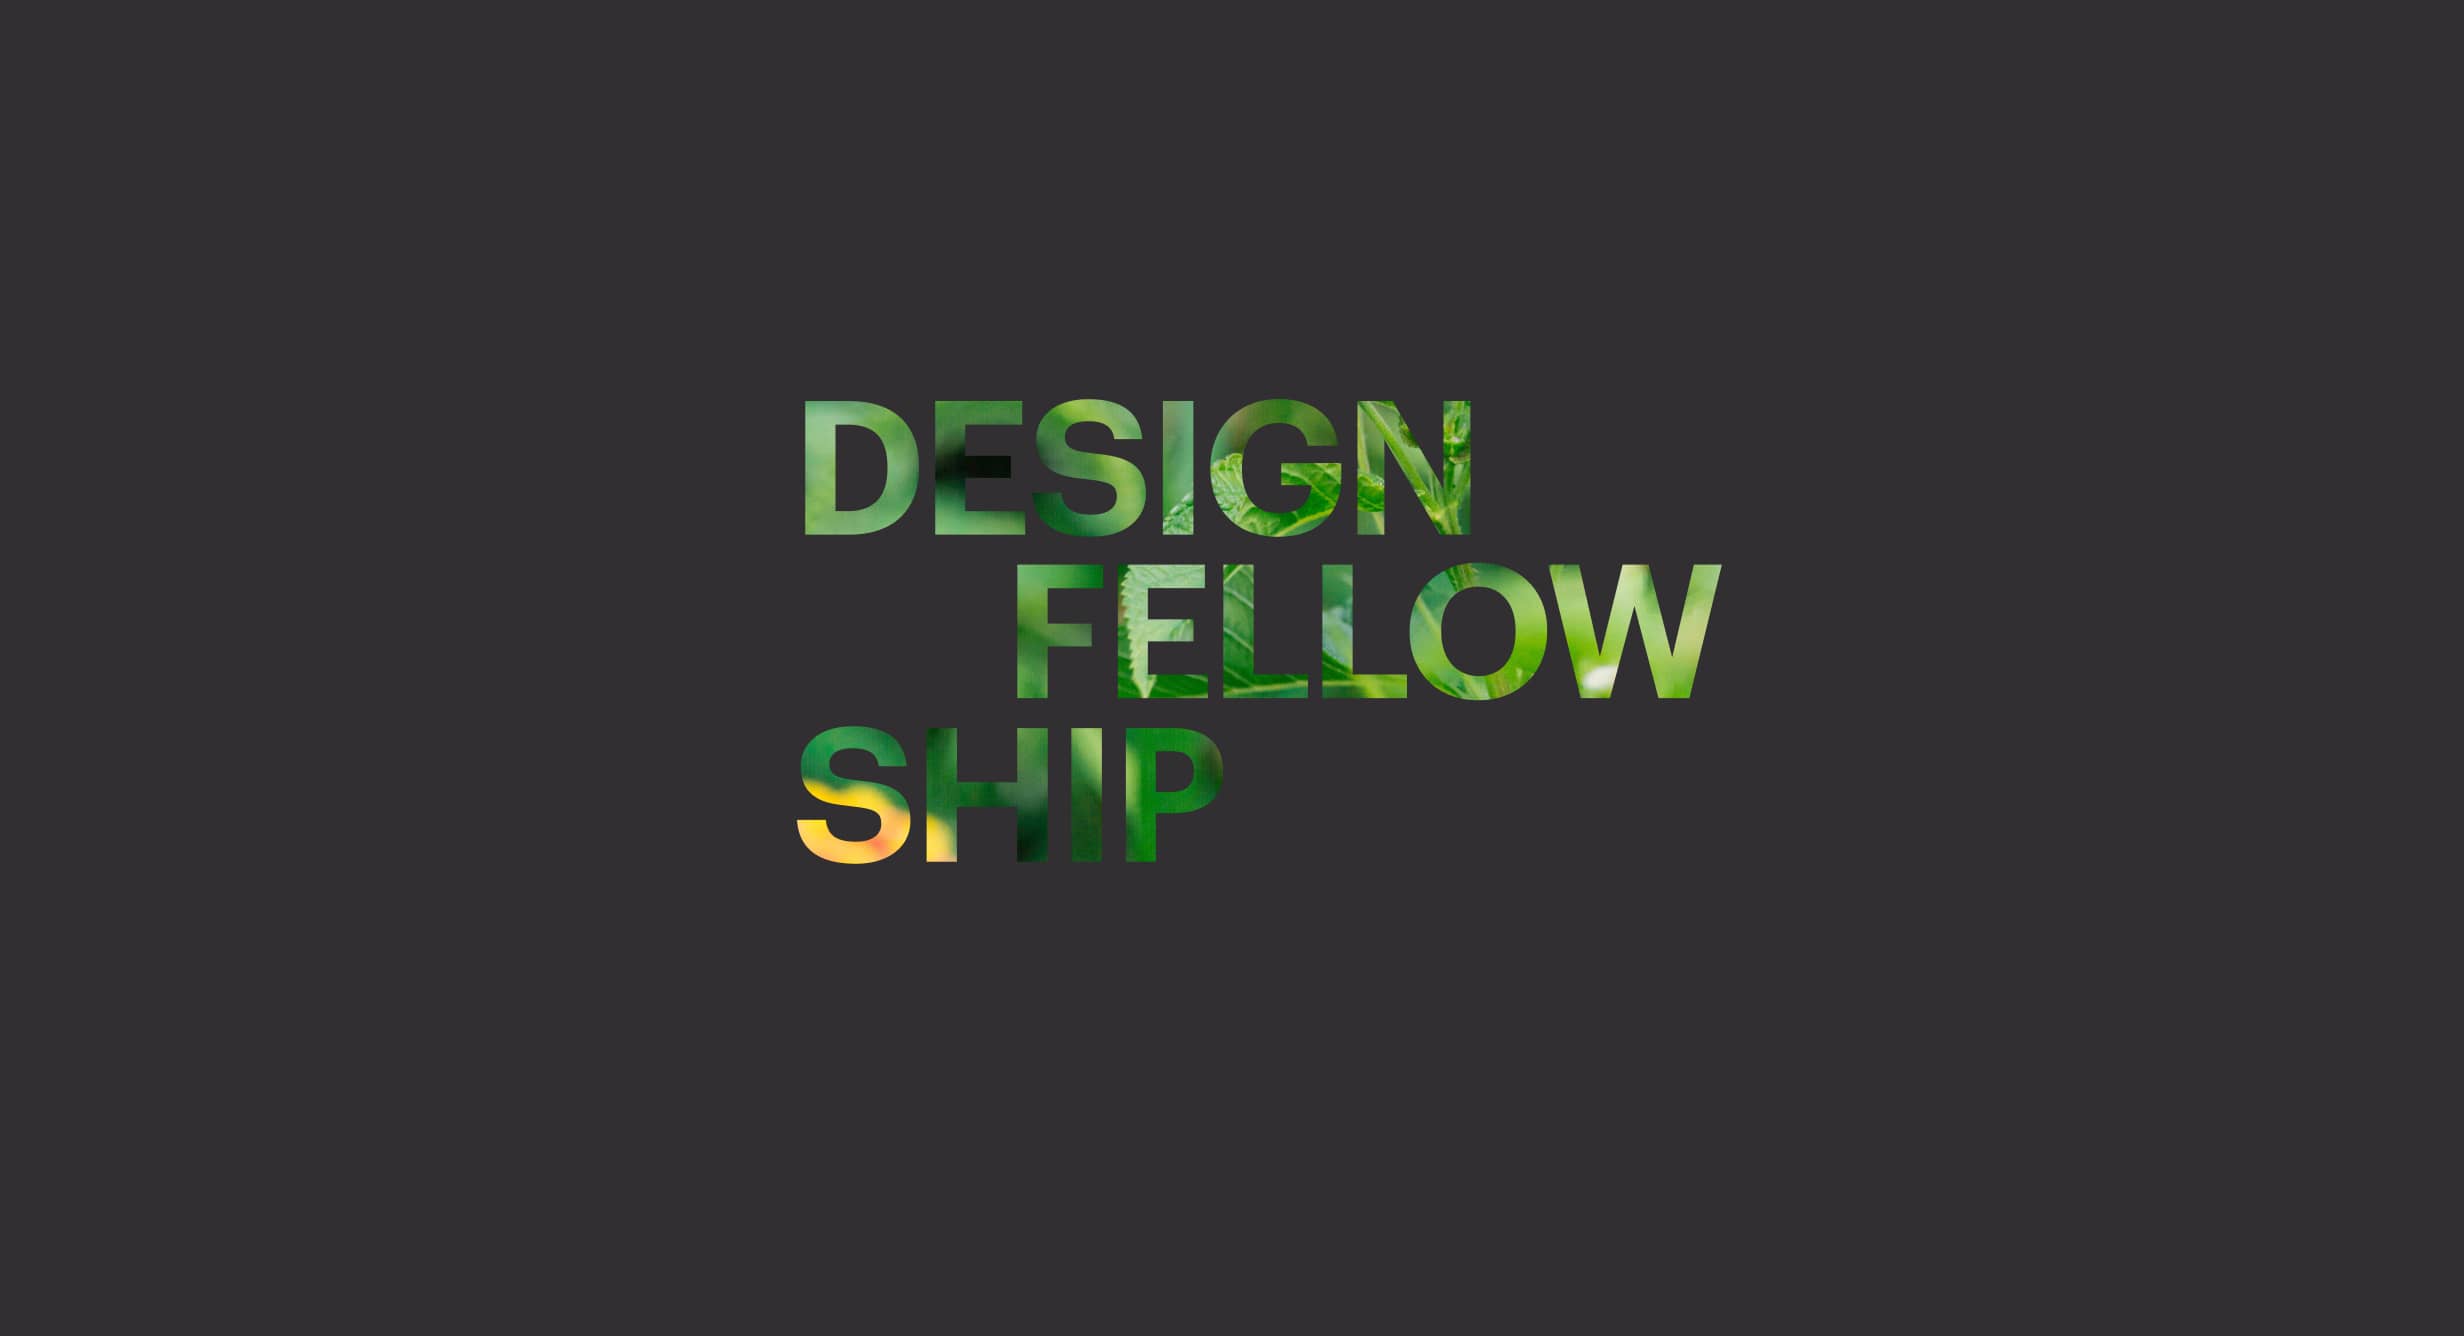 HKS Global Design Fellowship Cultivates Design Excellence